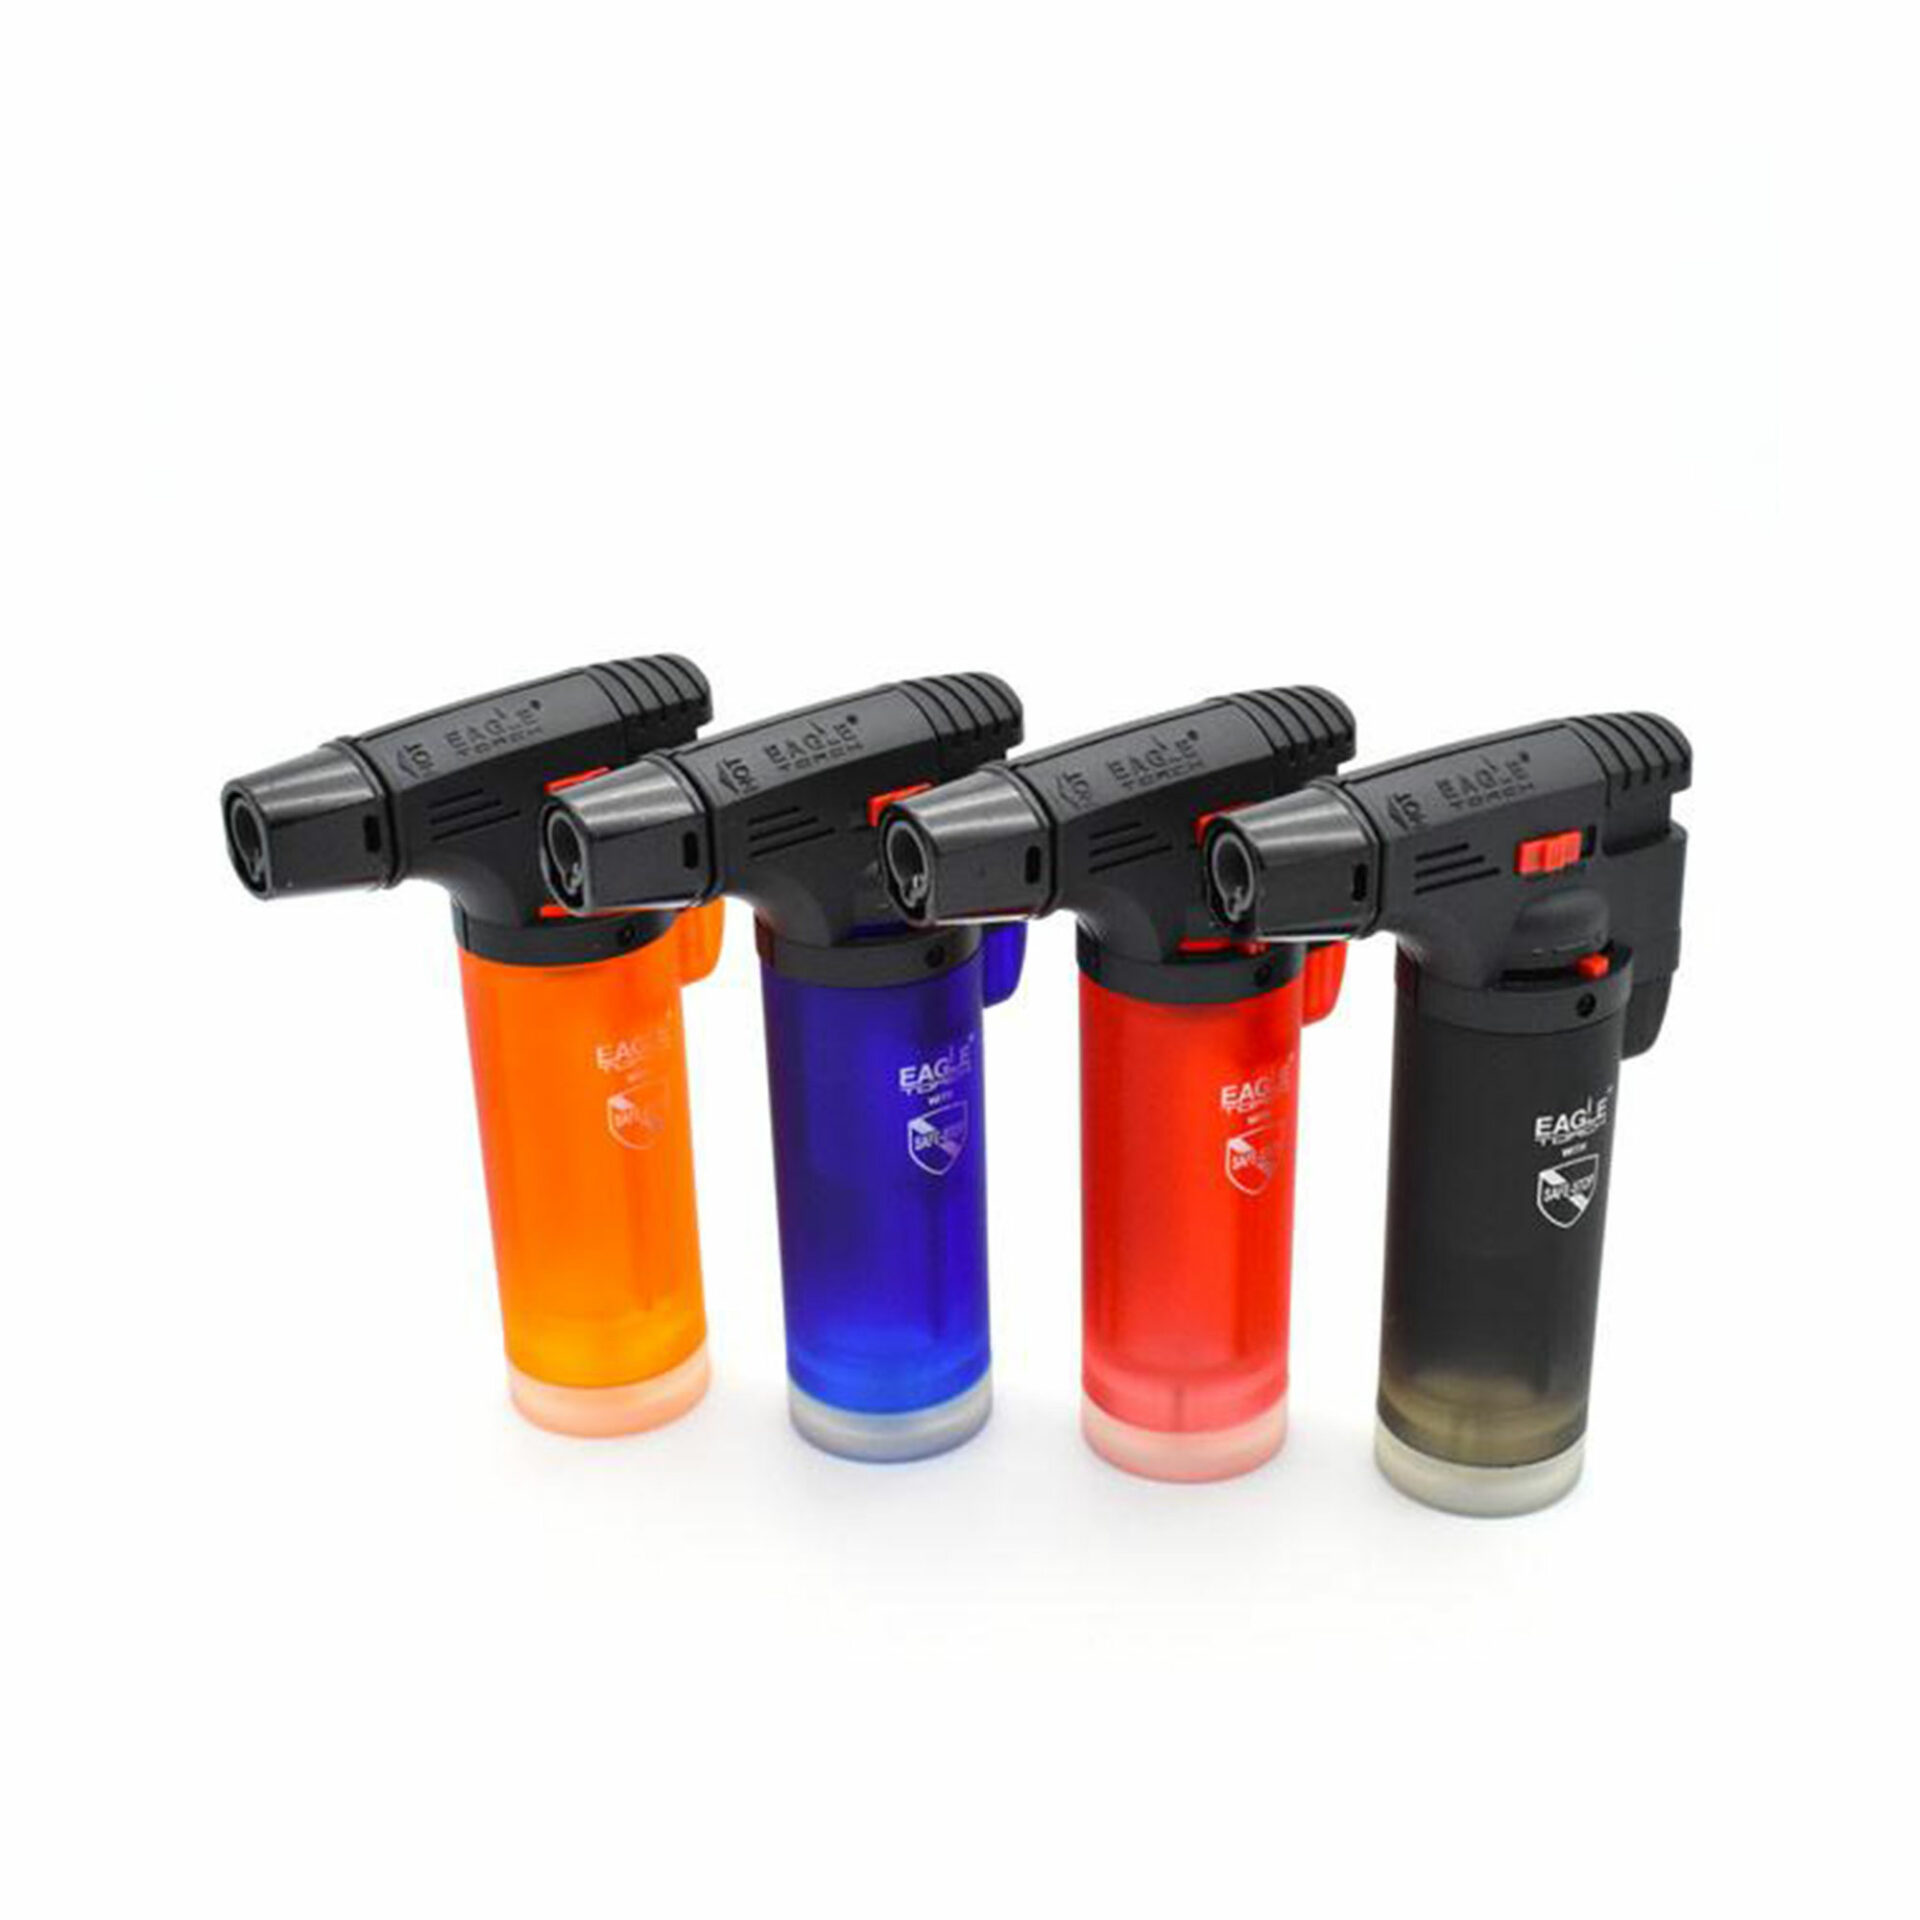 Eagle Torch Gun Butane Gas Lighters Assorted Colors PT101U